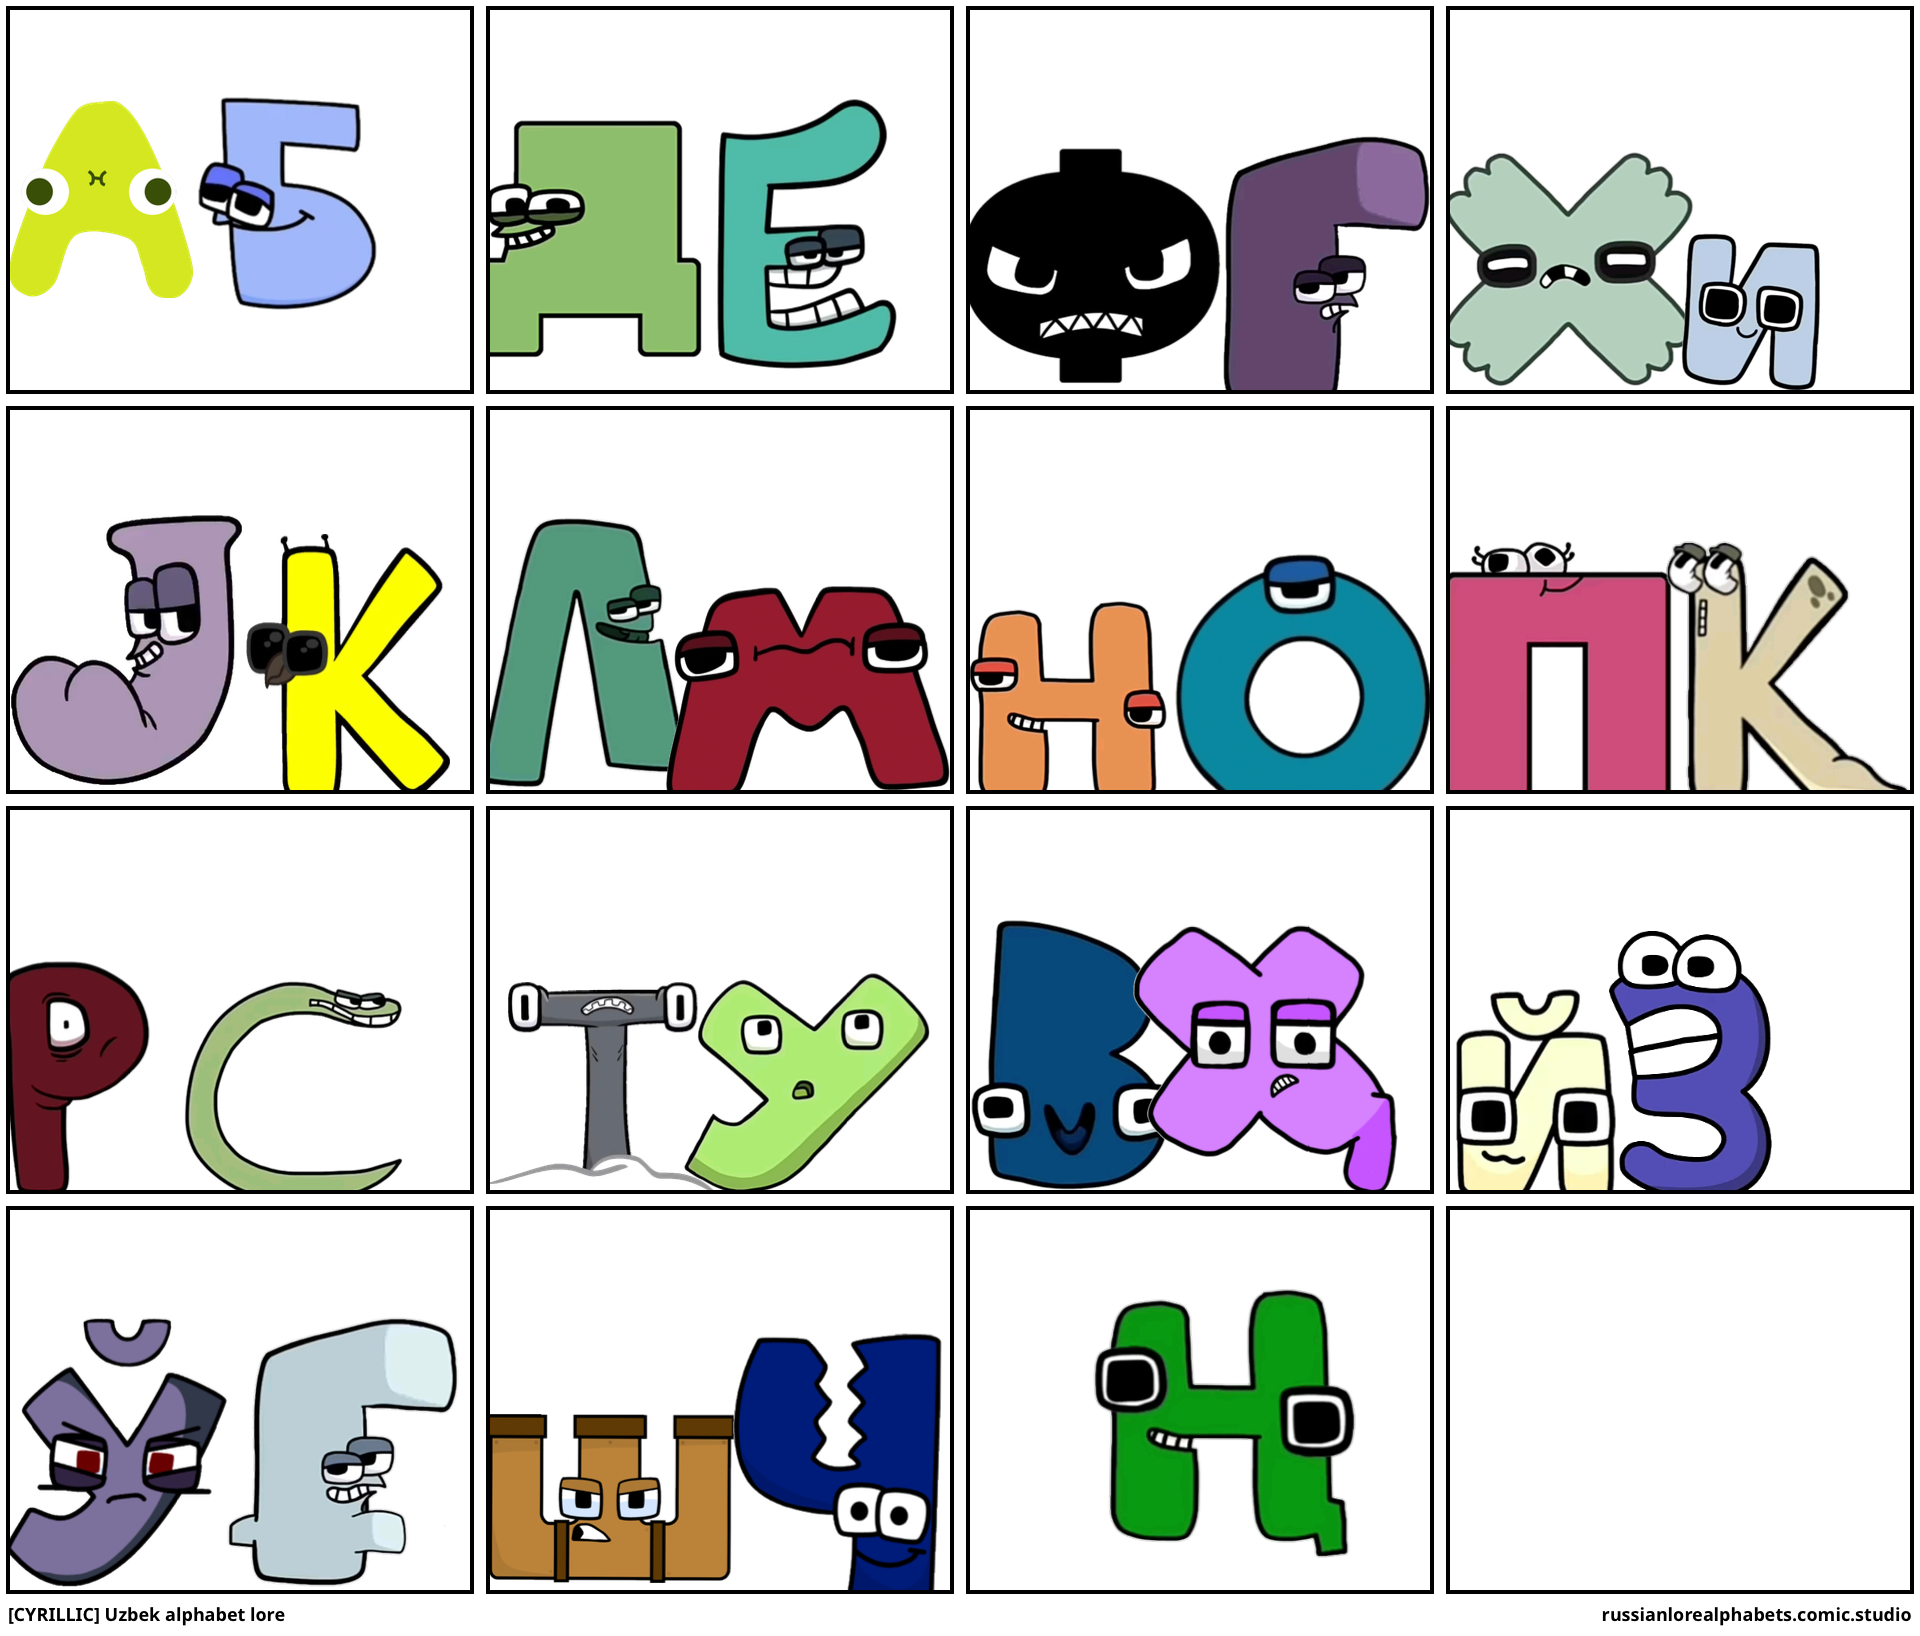 CYRILLIC] Uzbek alphabet lore - Comic Studio